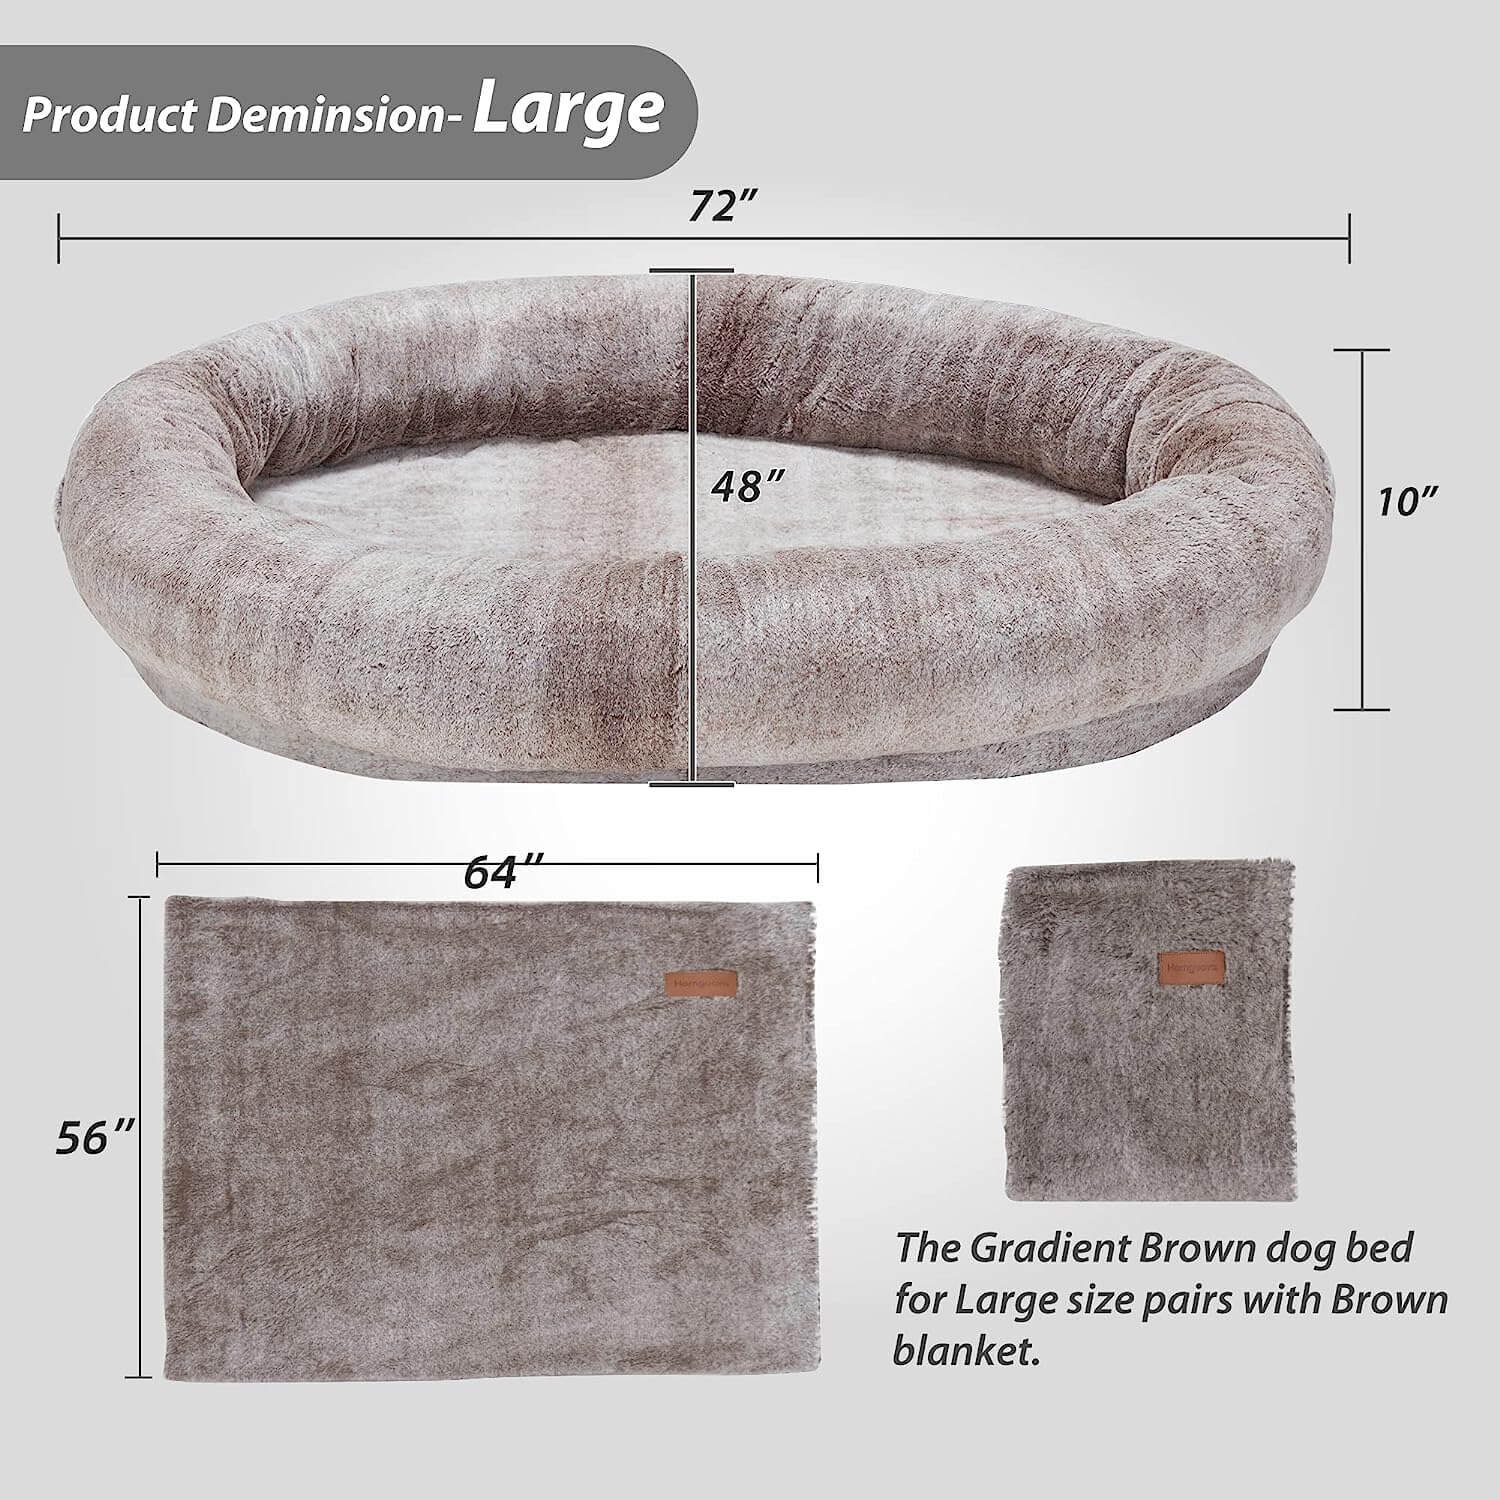 Large Bean Bag Beds dimensions